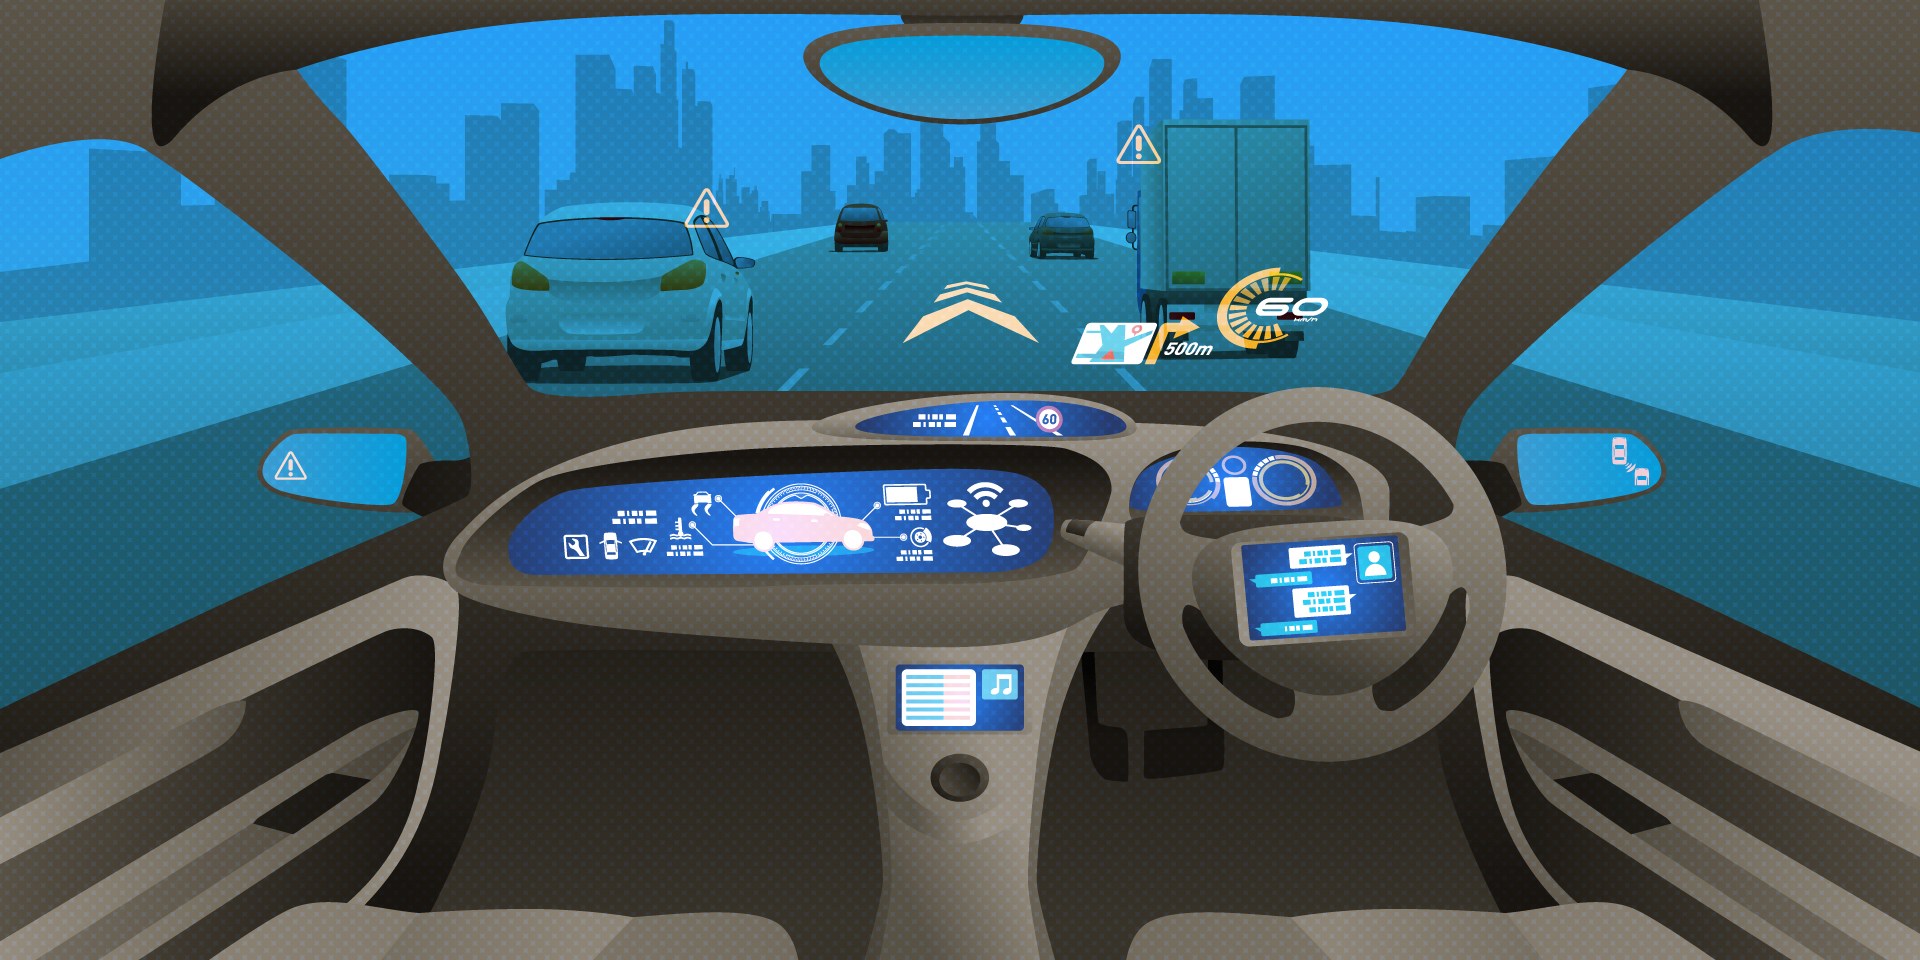 सेल्फ ड्राइविंग कार self driving car in hindi